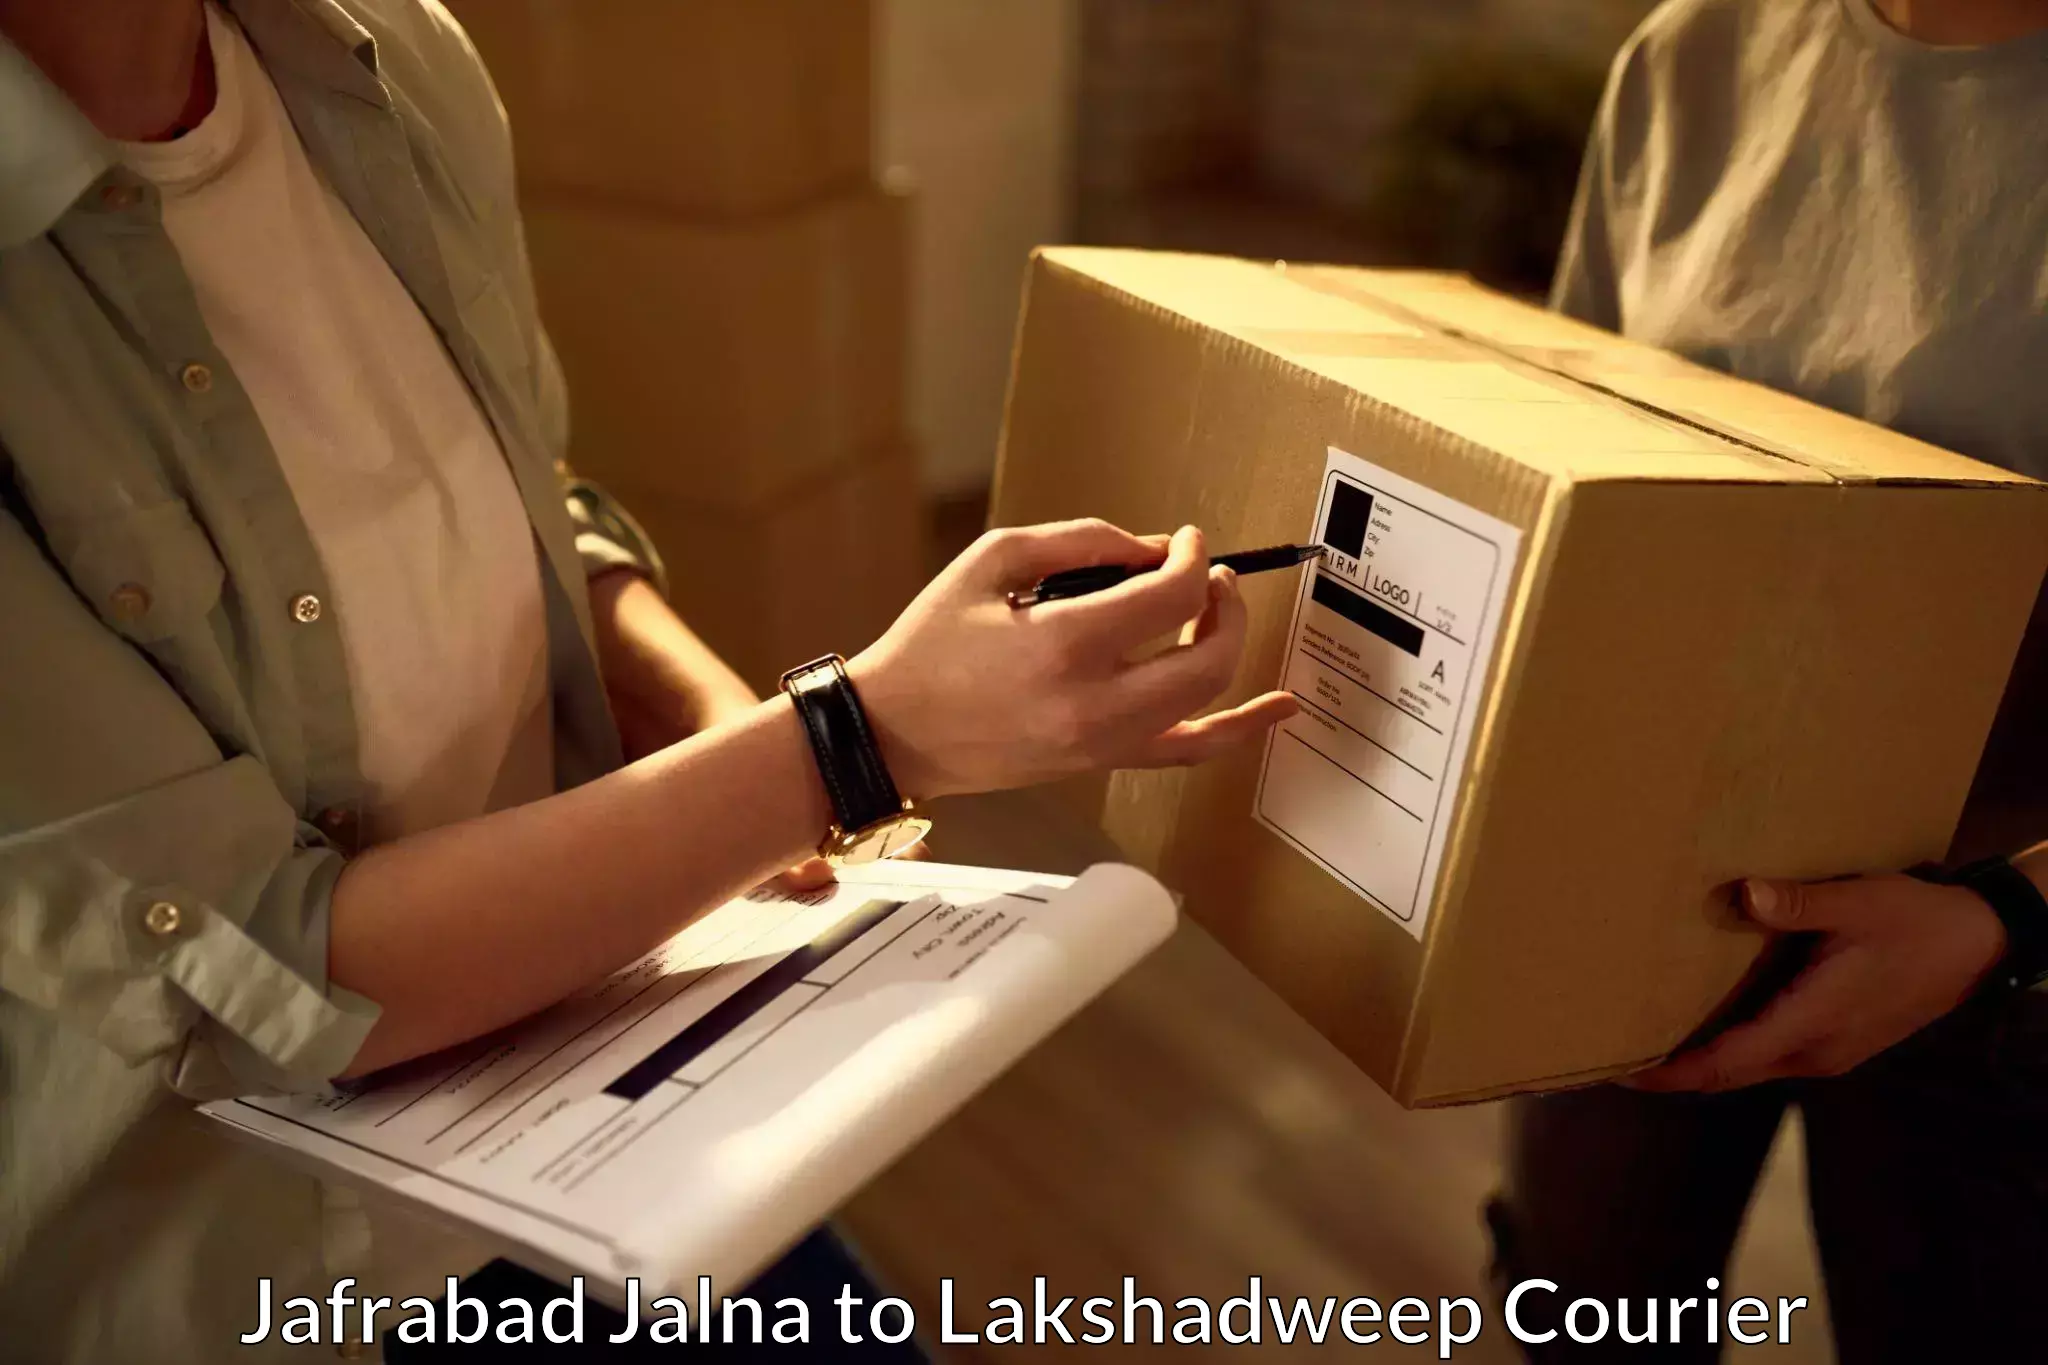 Express package handling in Jafrabad Jalna to Lakshadweep